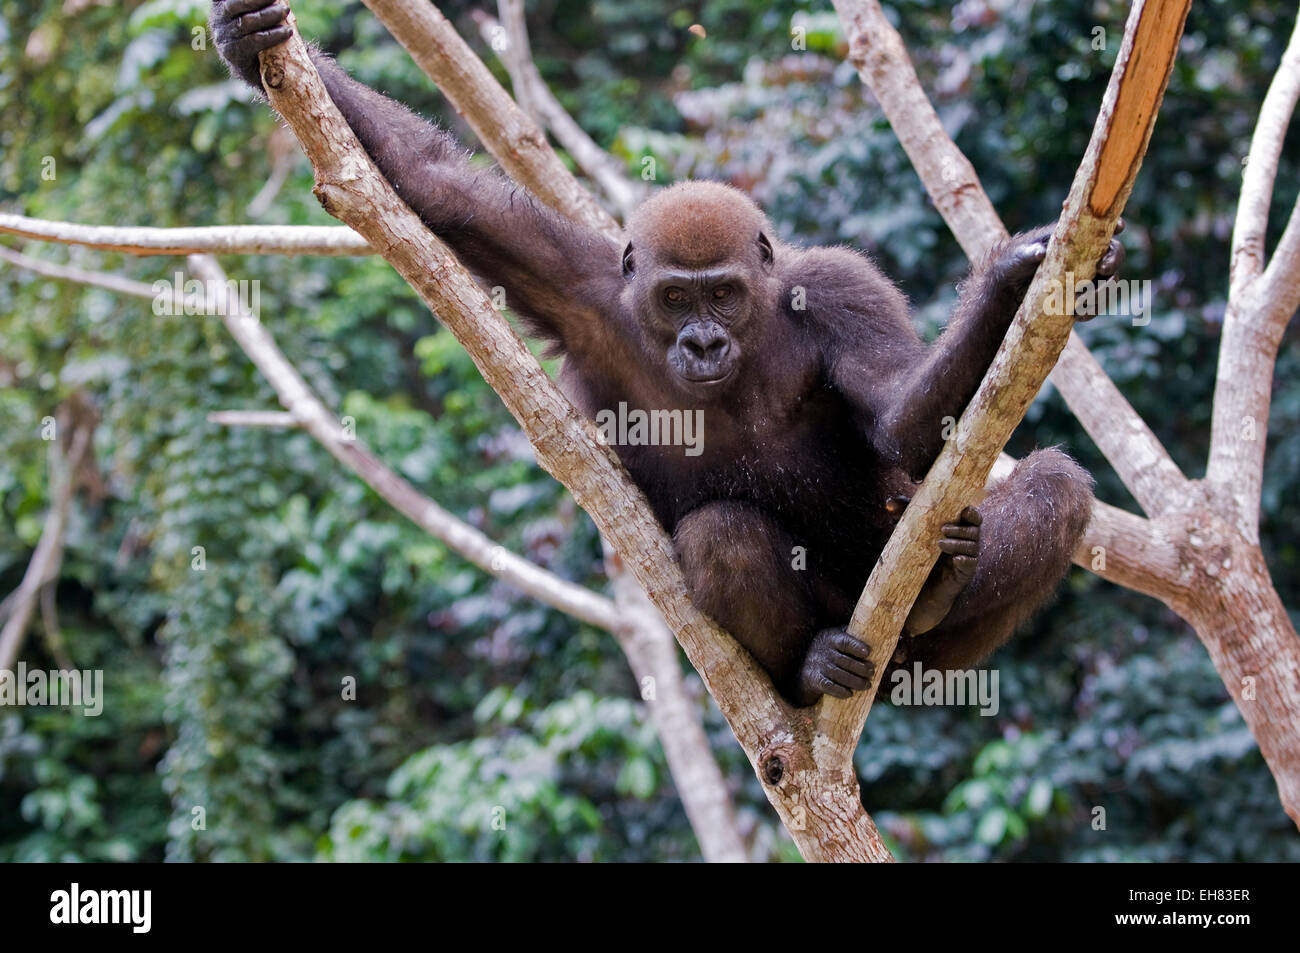 Riabilitato orfani pianura occidentale gorilla reintrodotti in habitat naturale, Parc de la Lekedi, Haut-Ogooue, Gabon, Africa Foto Stock